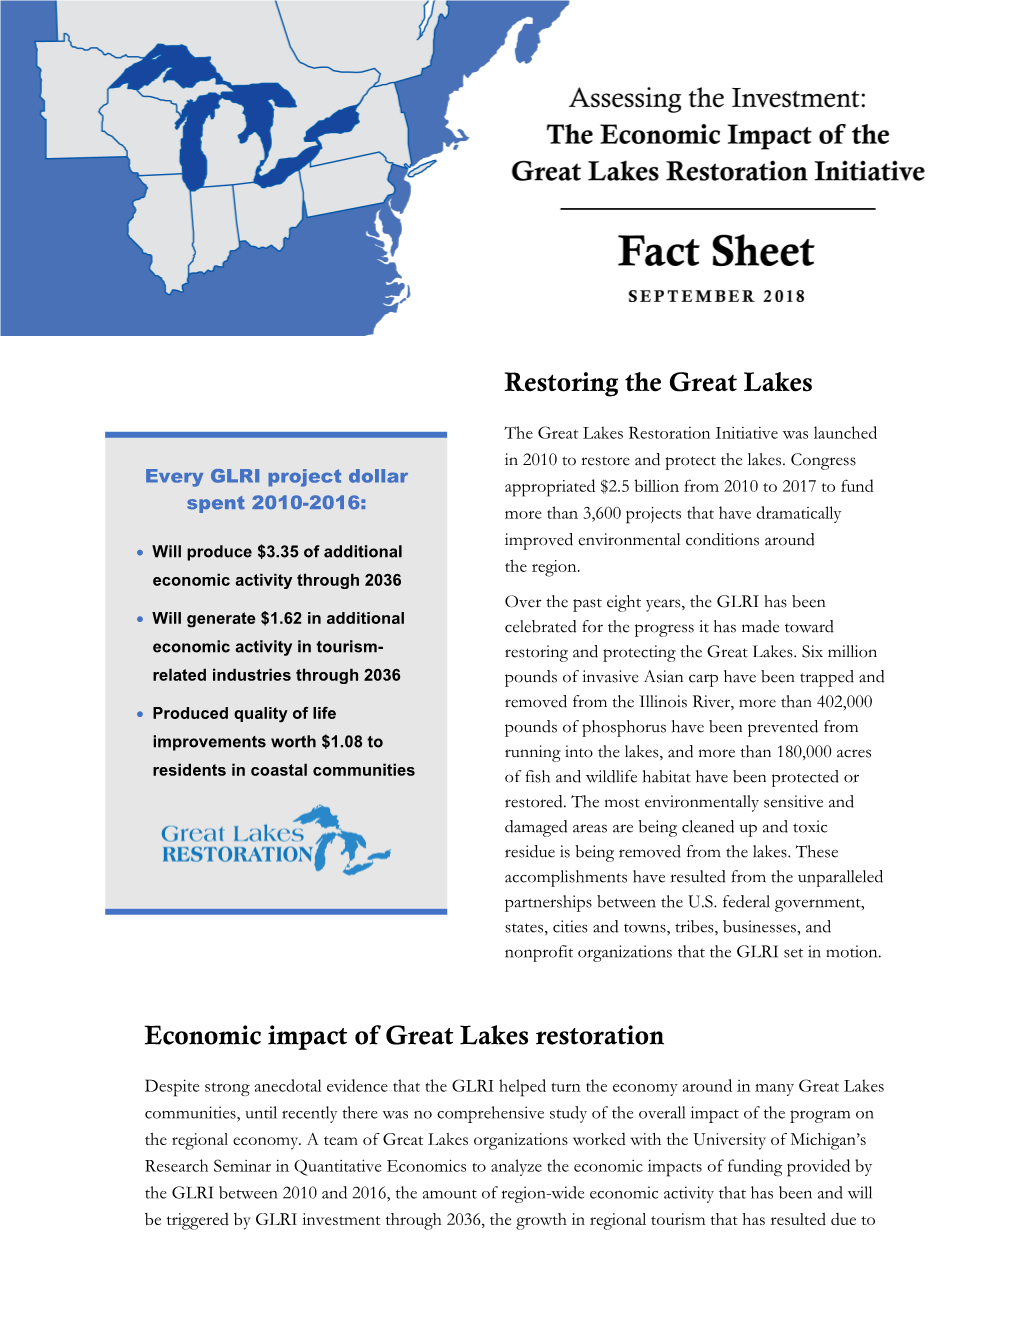 Restoring the Great Lakes Economic Impact